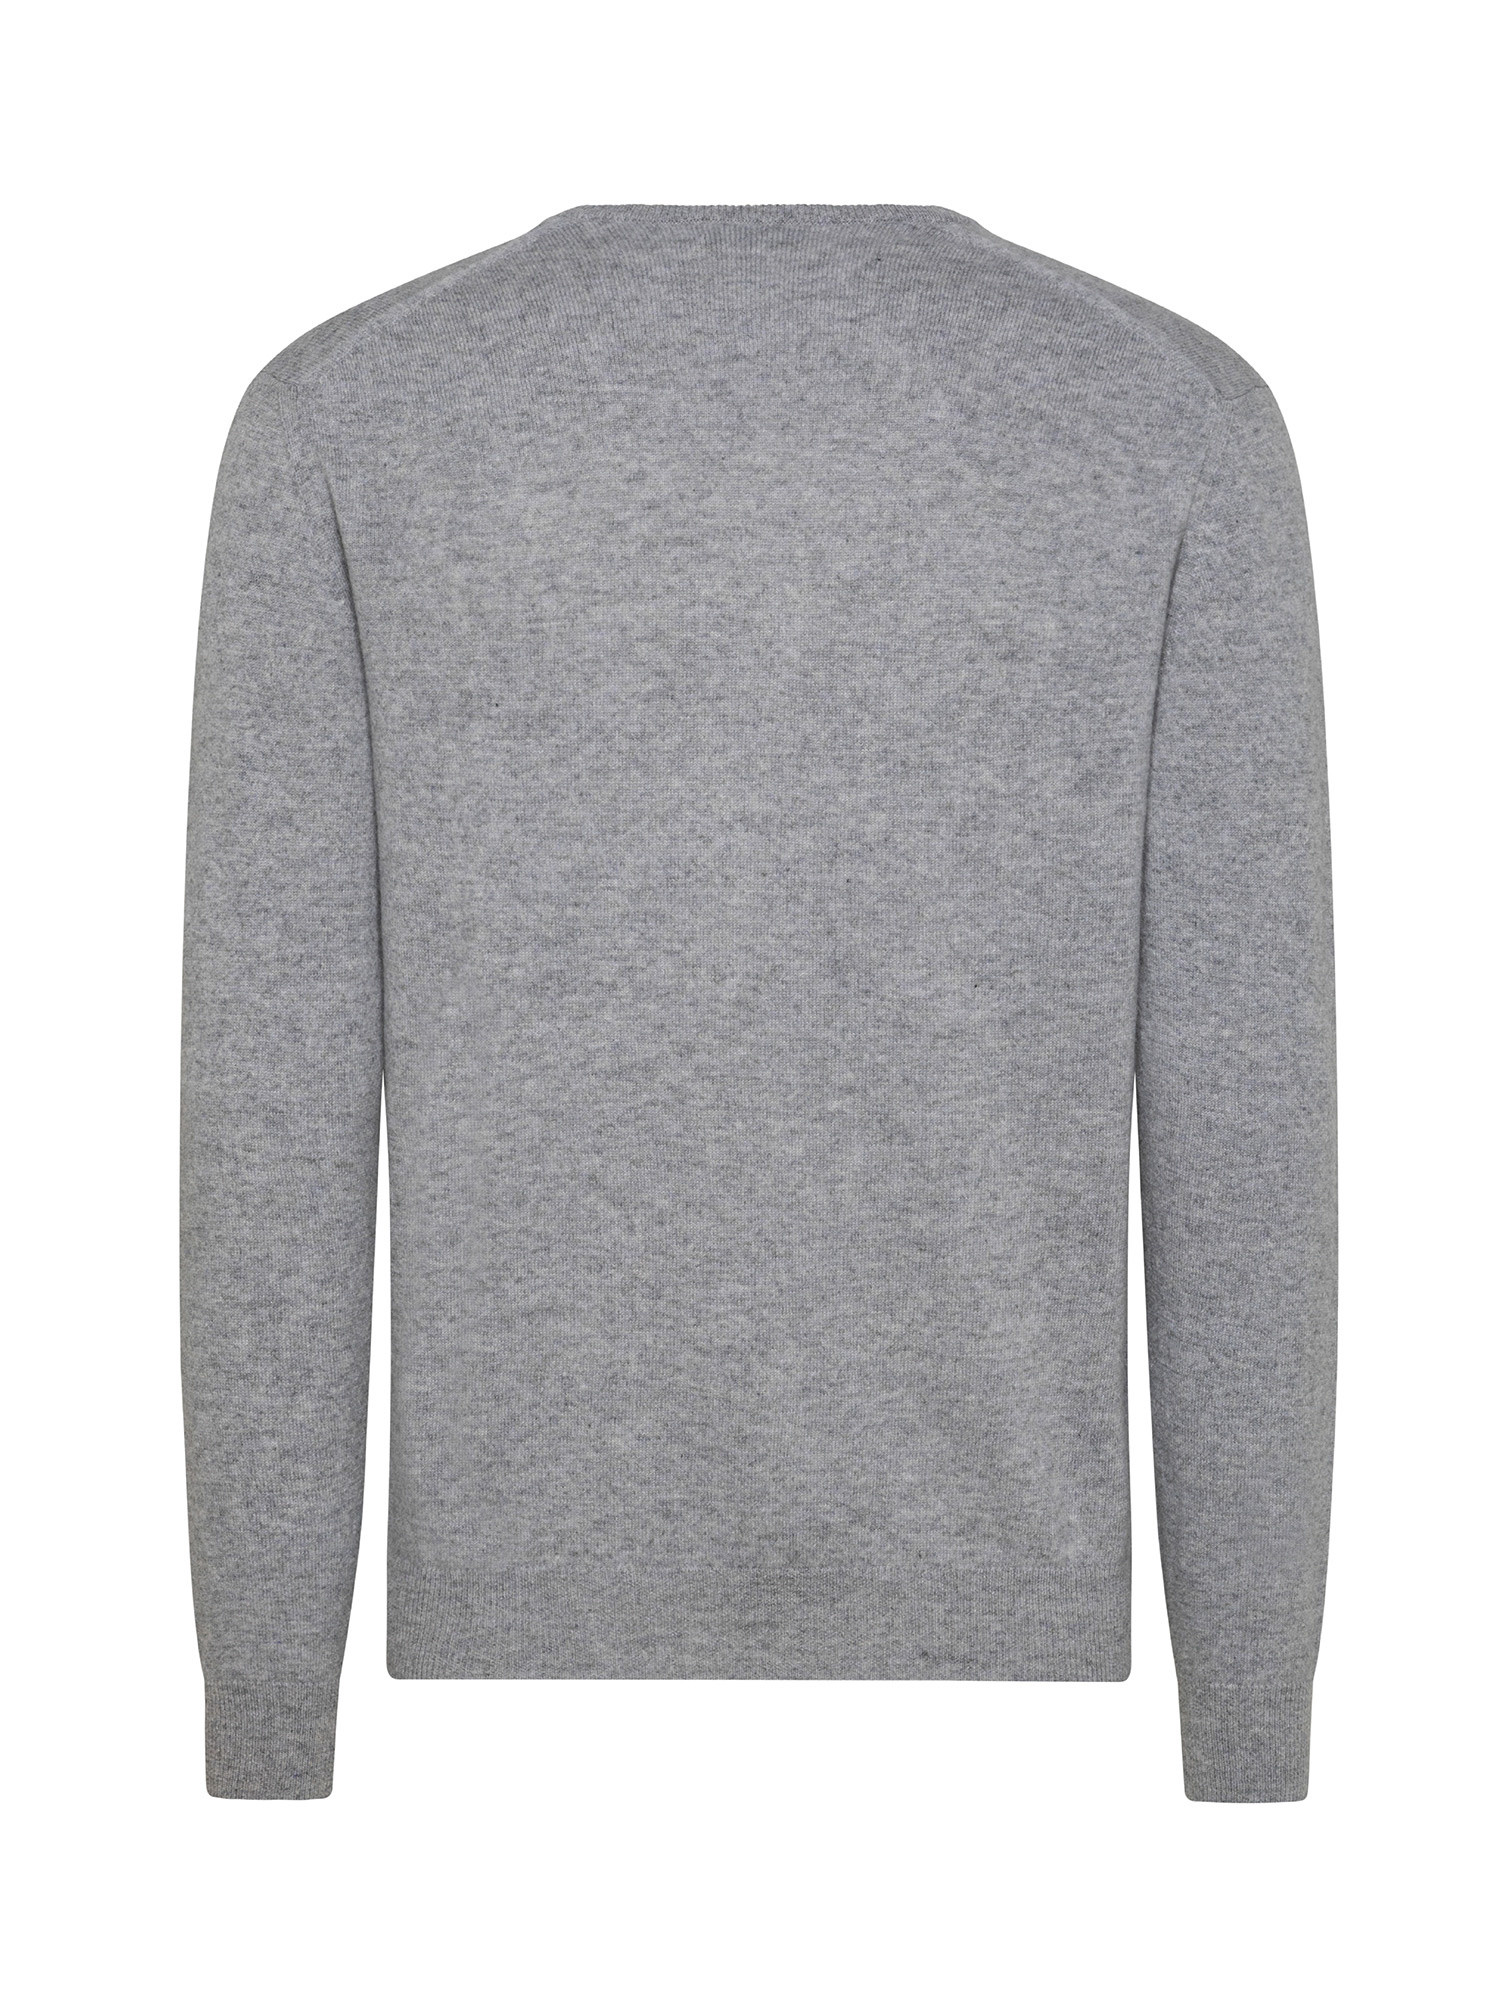 V-neck pullover in pure cashmere, Grey, large image number 1